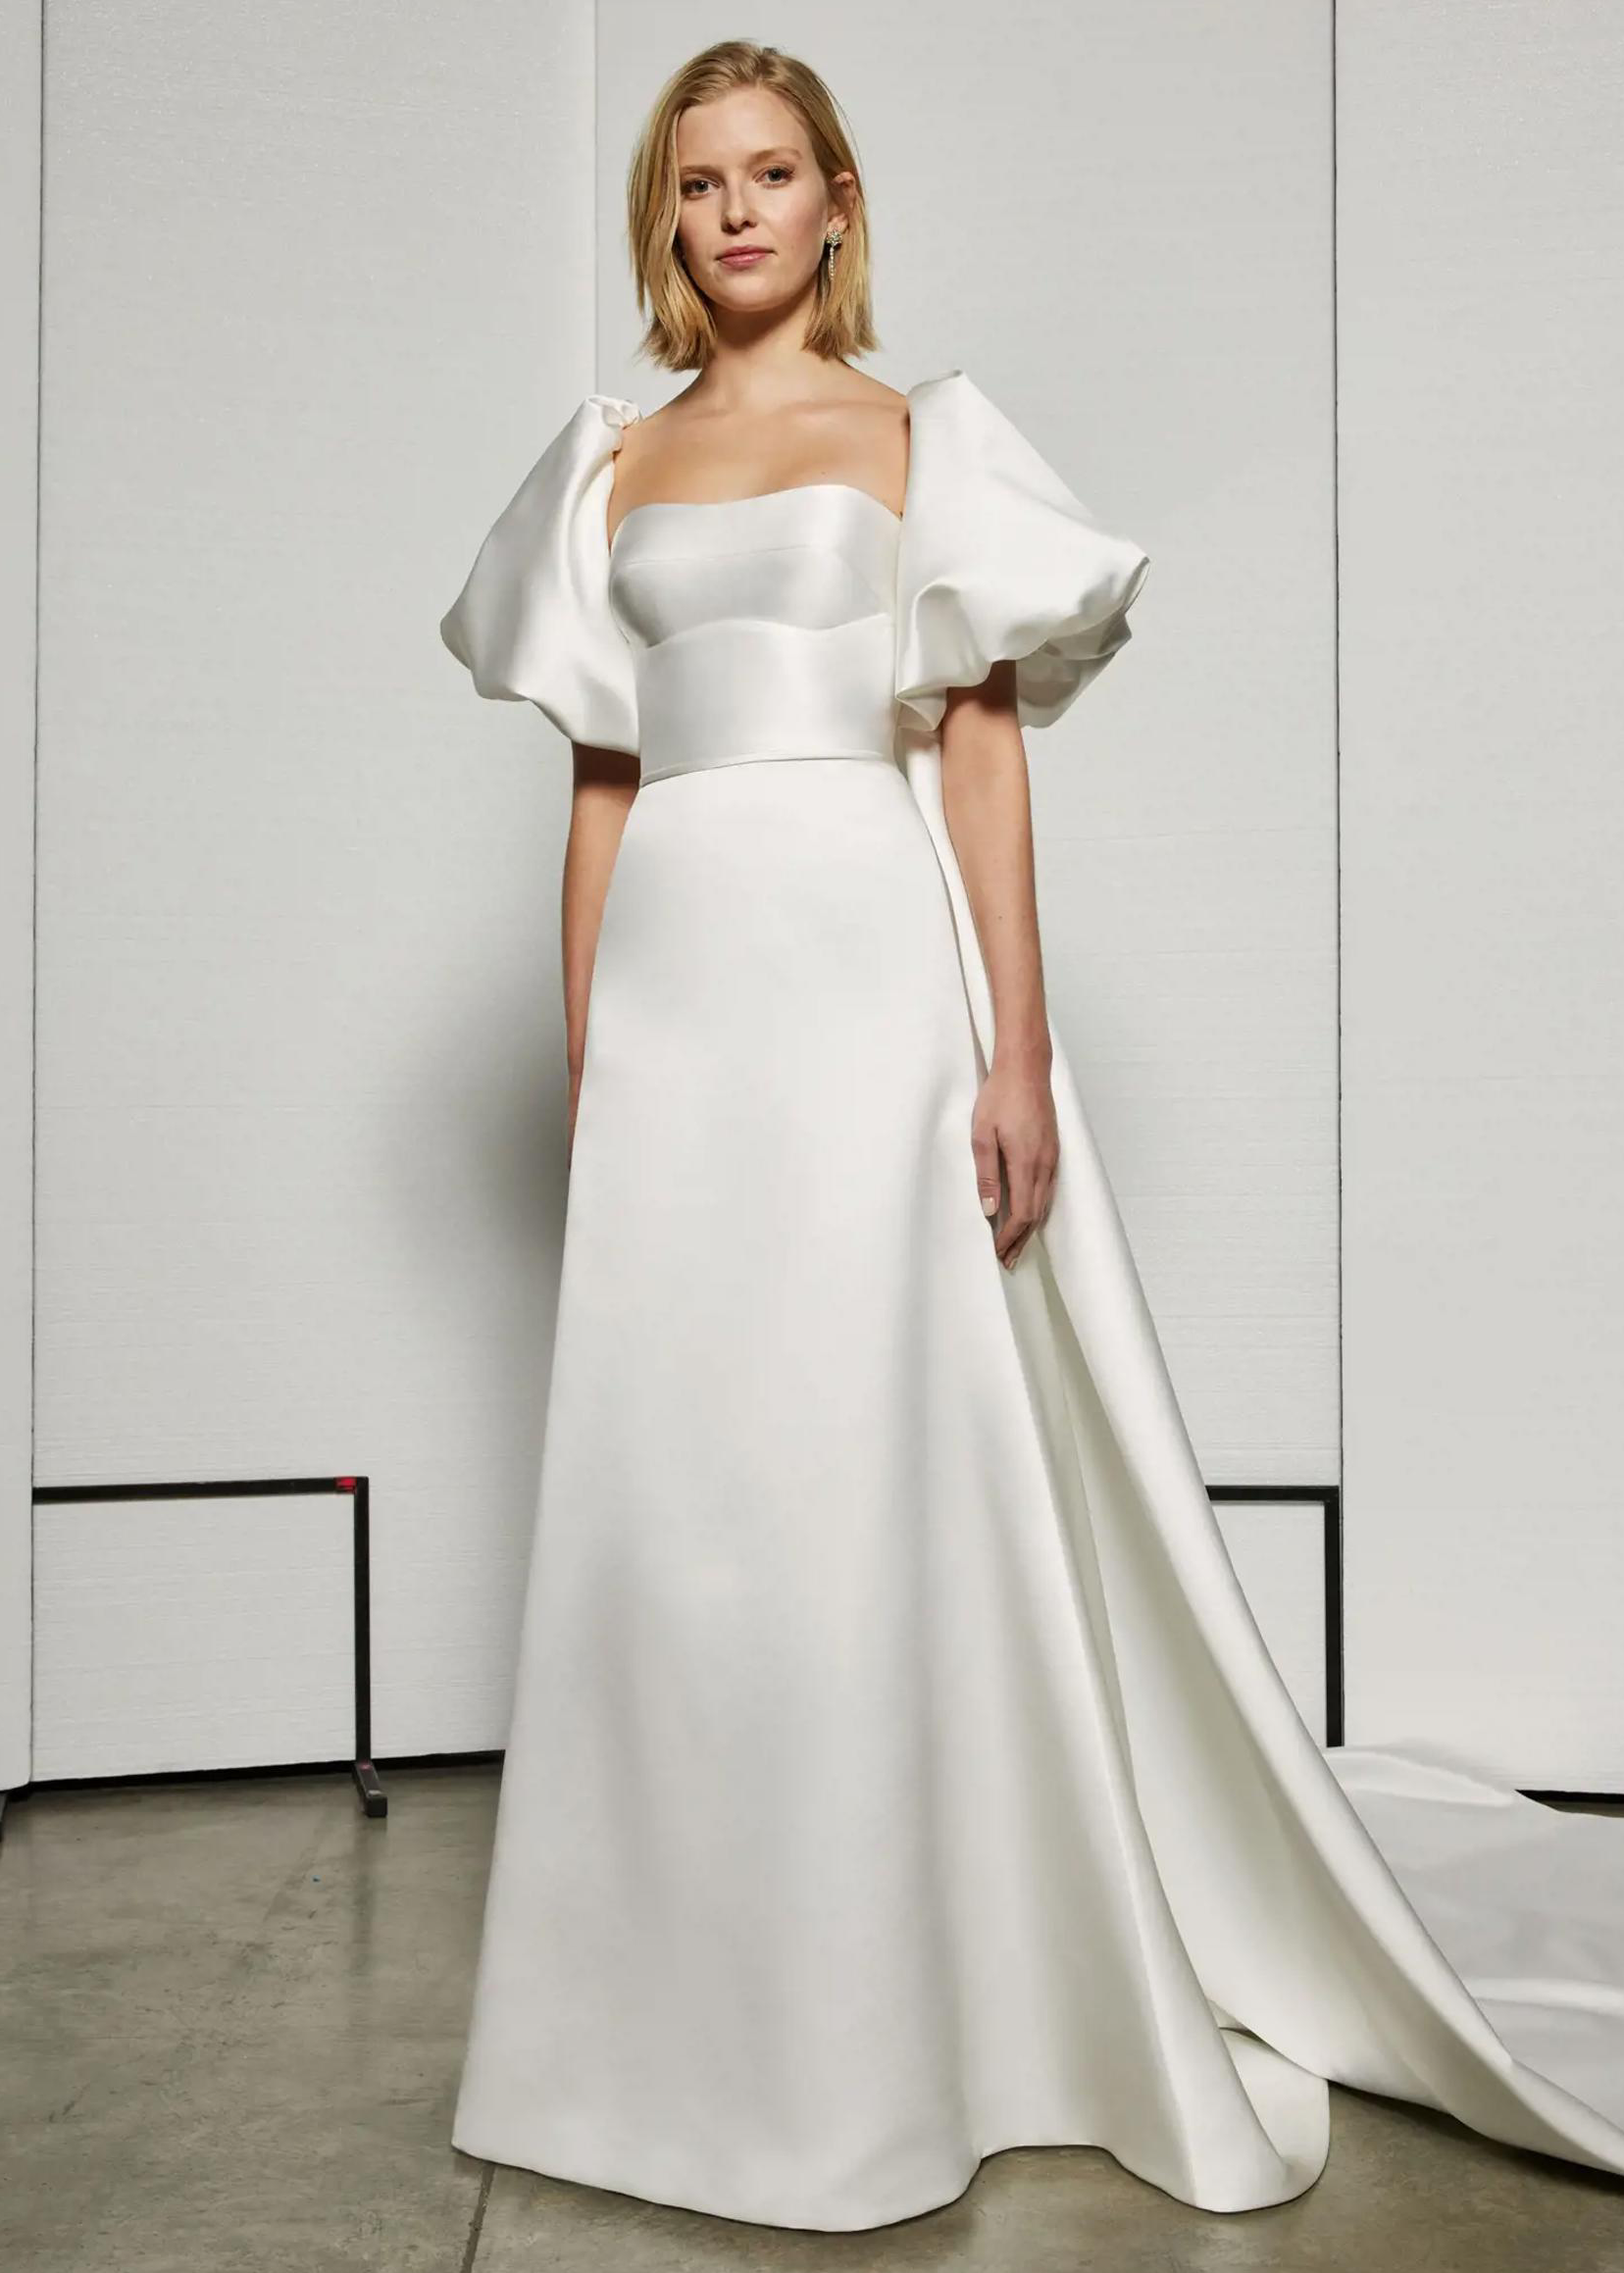 Model wearing a white a JESÚS PEIRÓ Gown